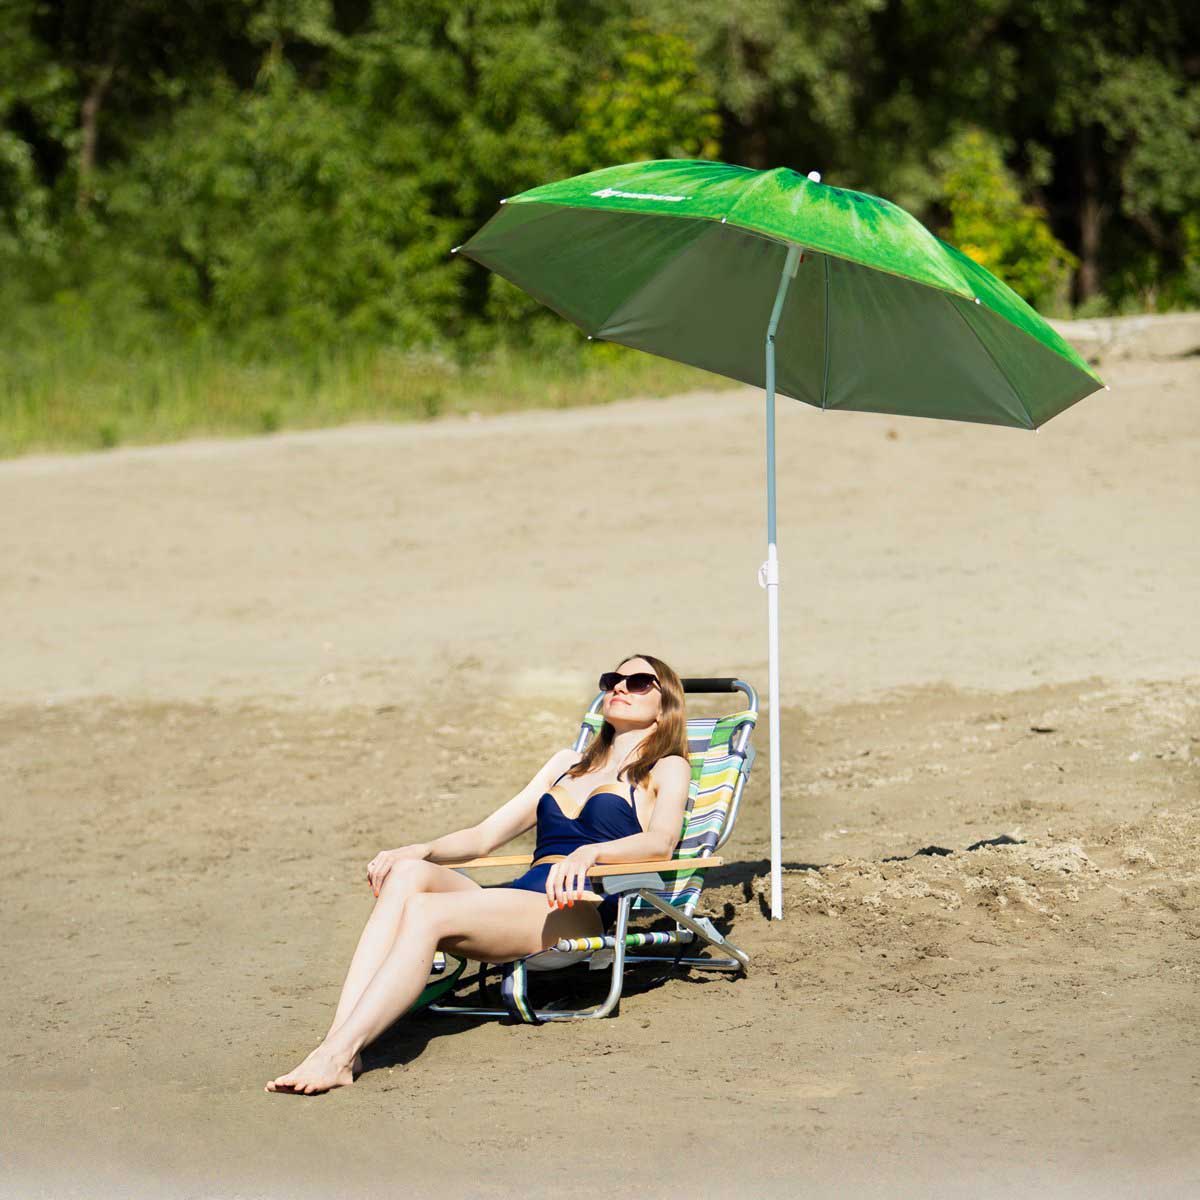 Girl sitting in the lounger under the Kiwi Folding Tilting Beach Umbrella